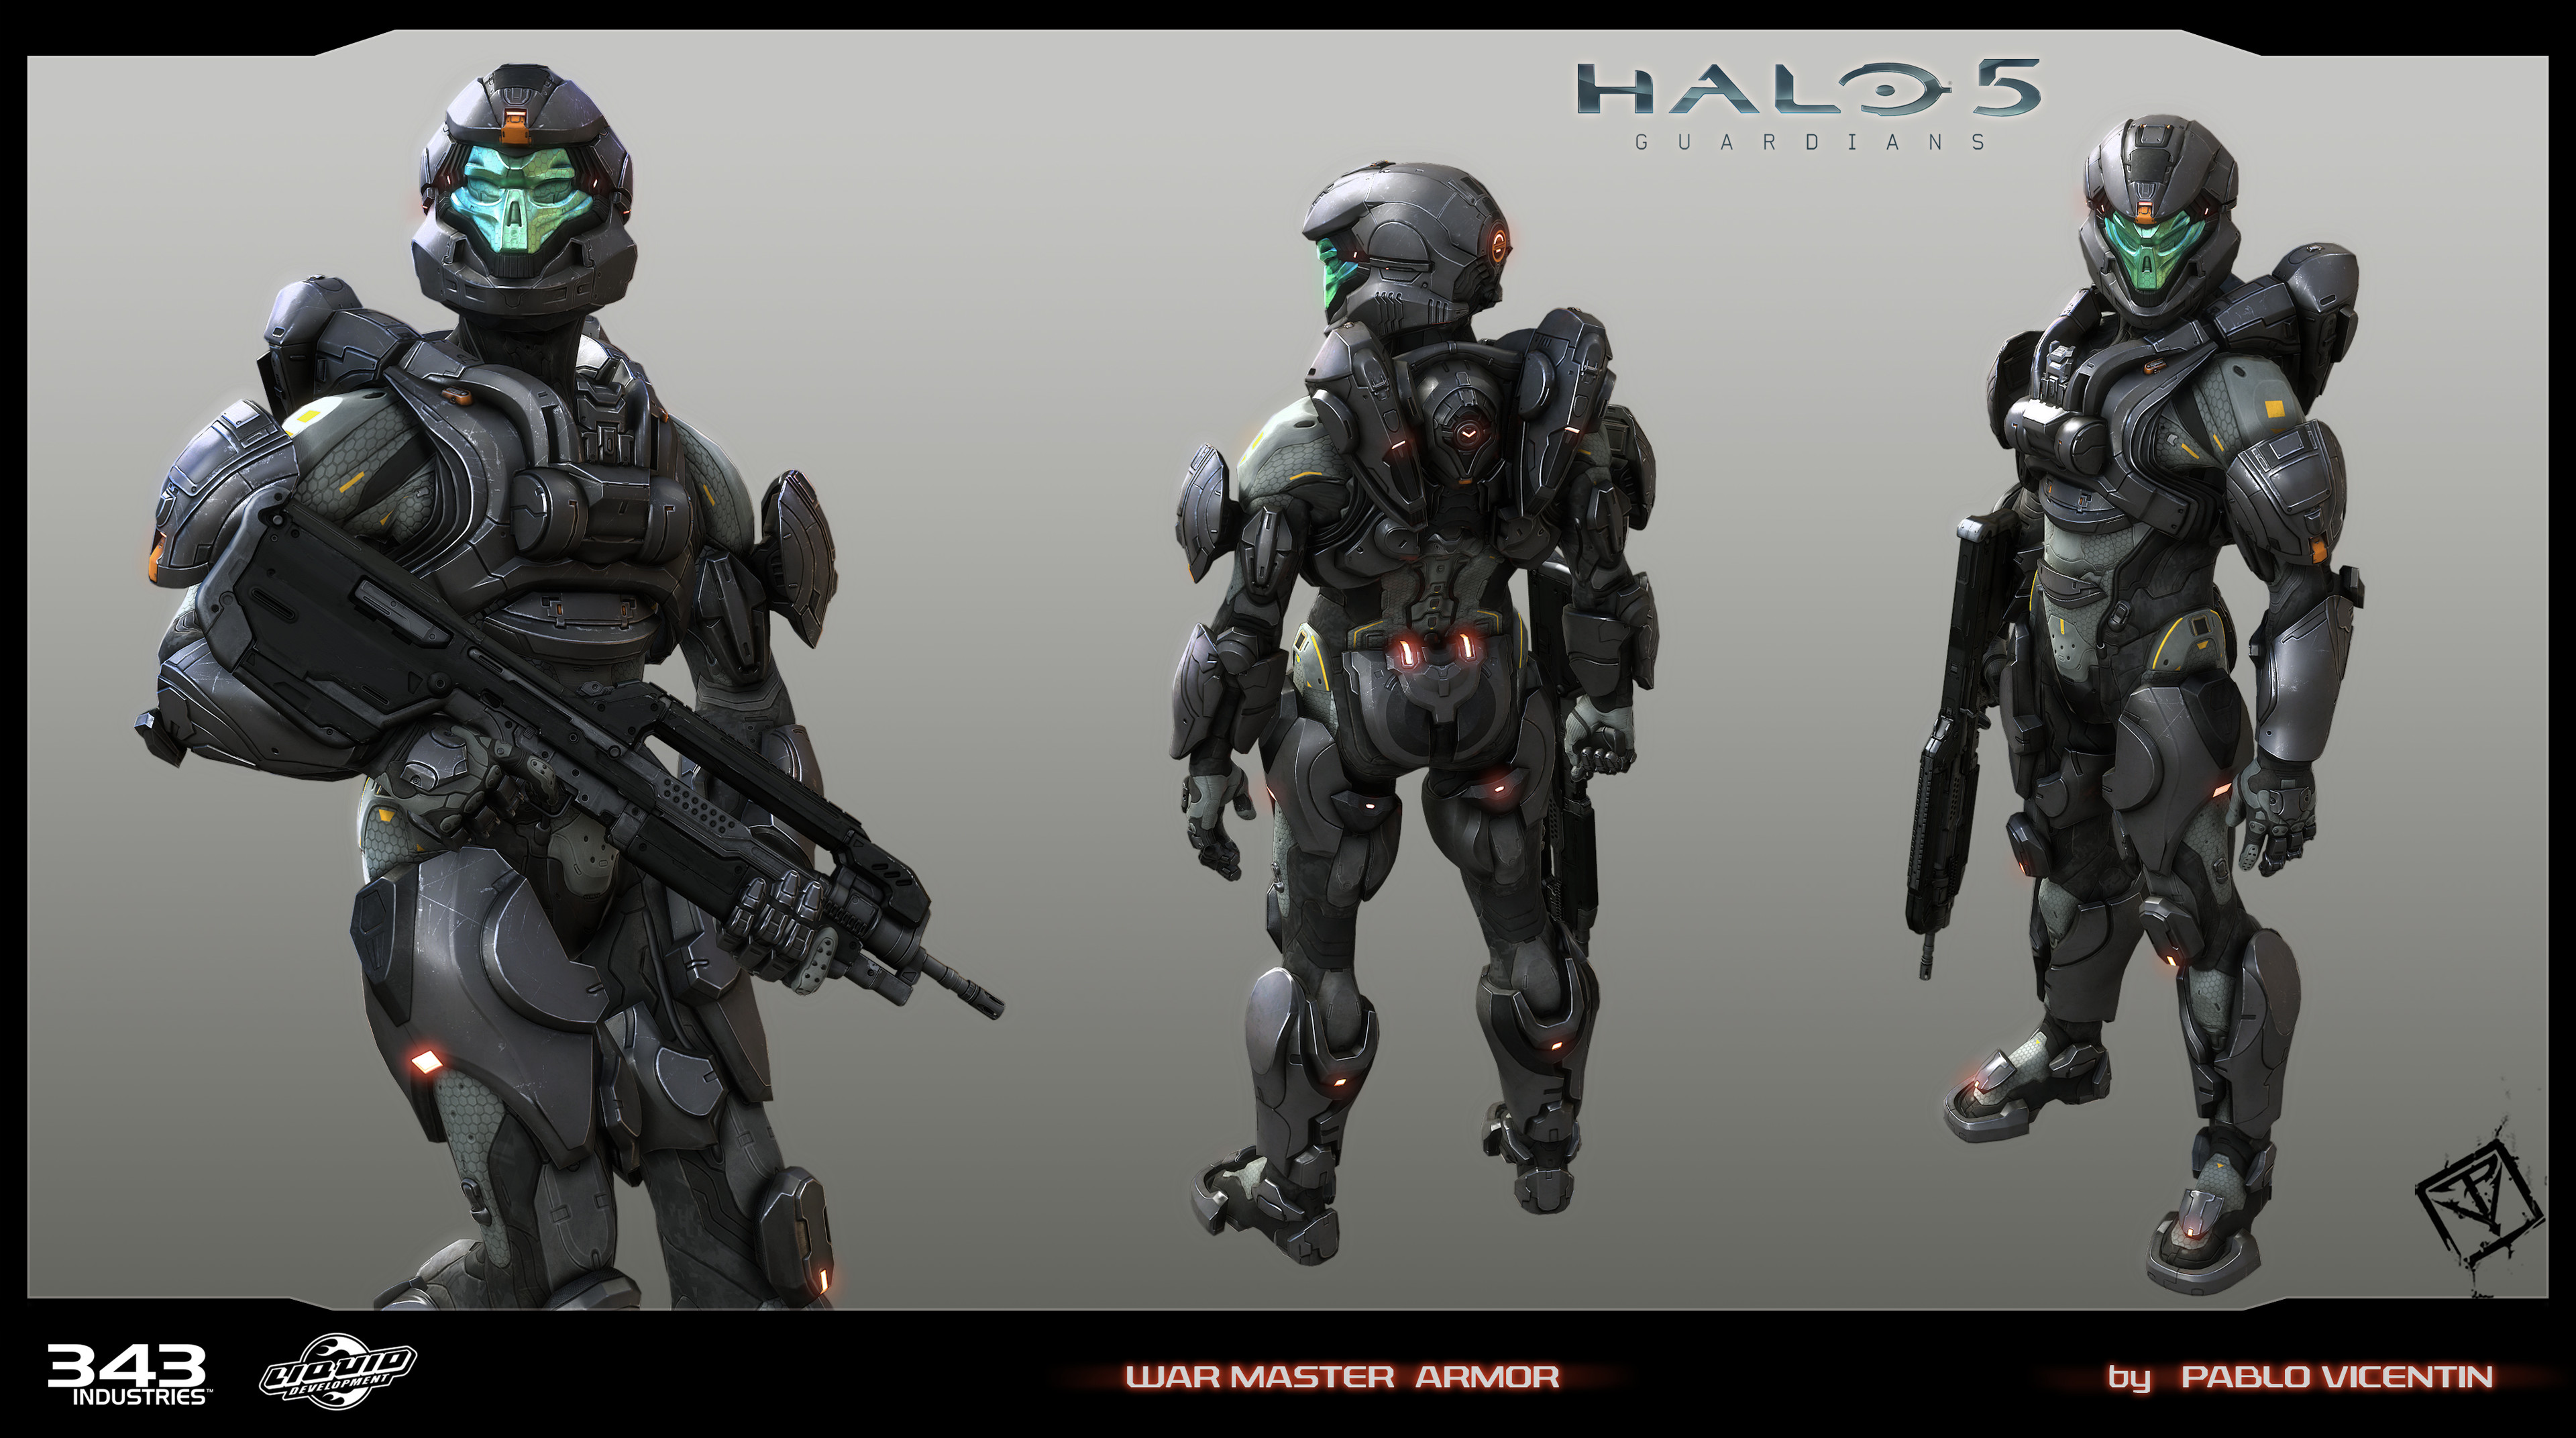 Halo 5 Guardians War Master Armor.